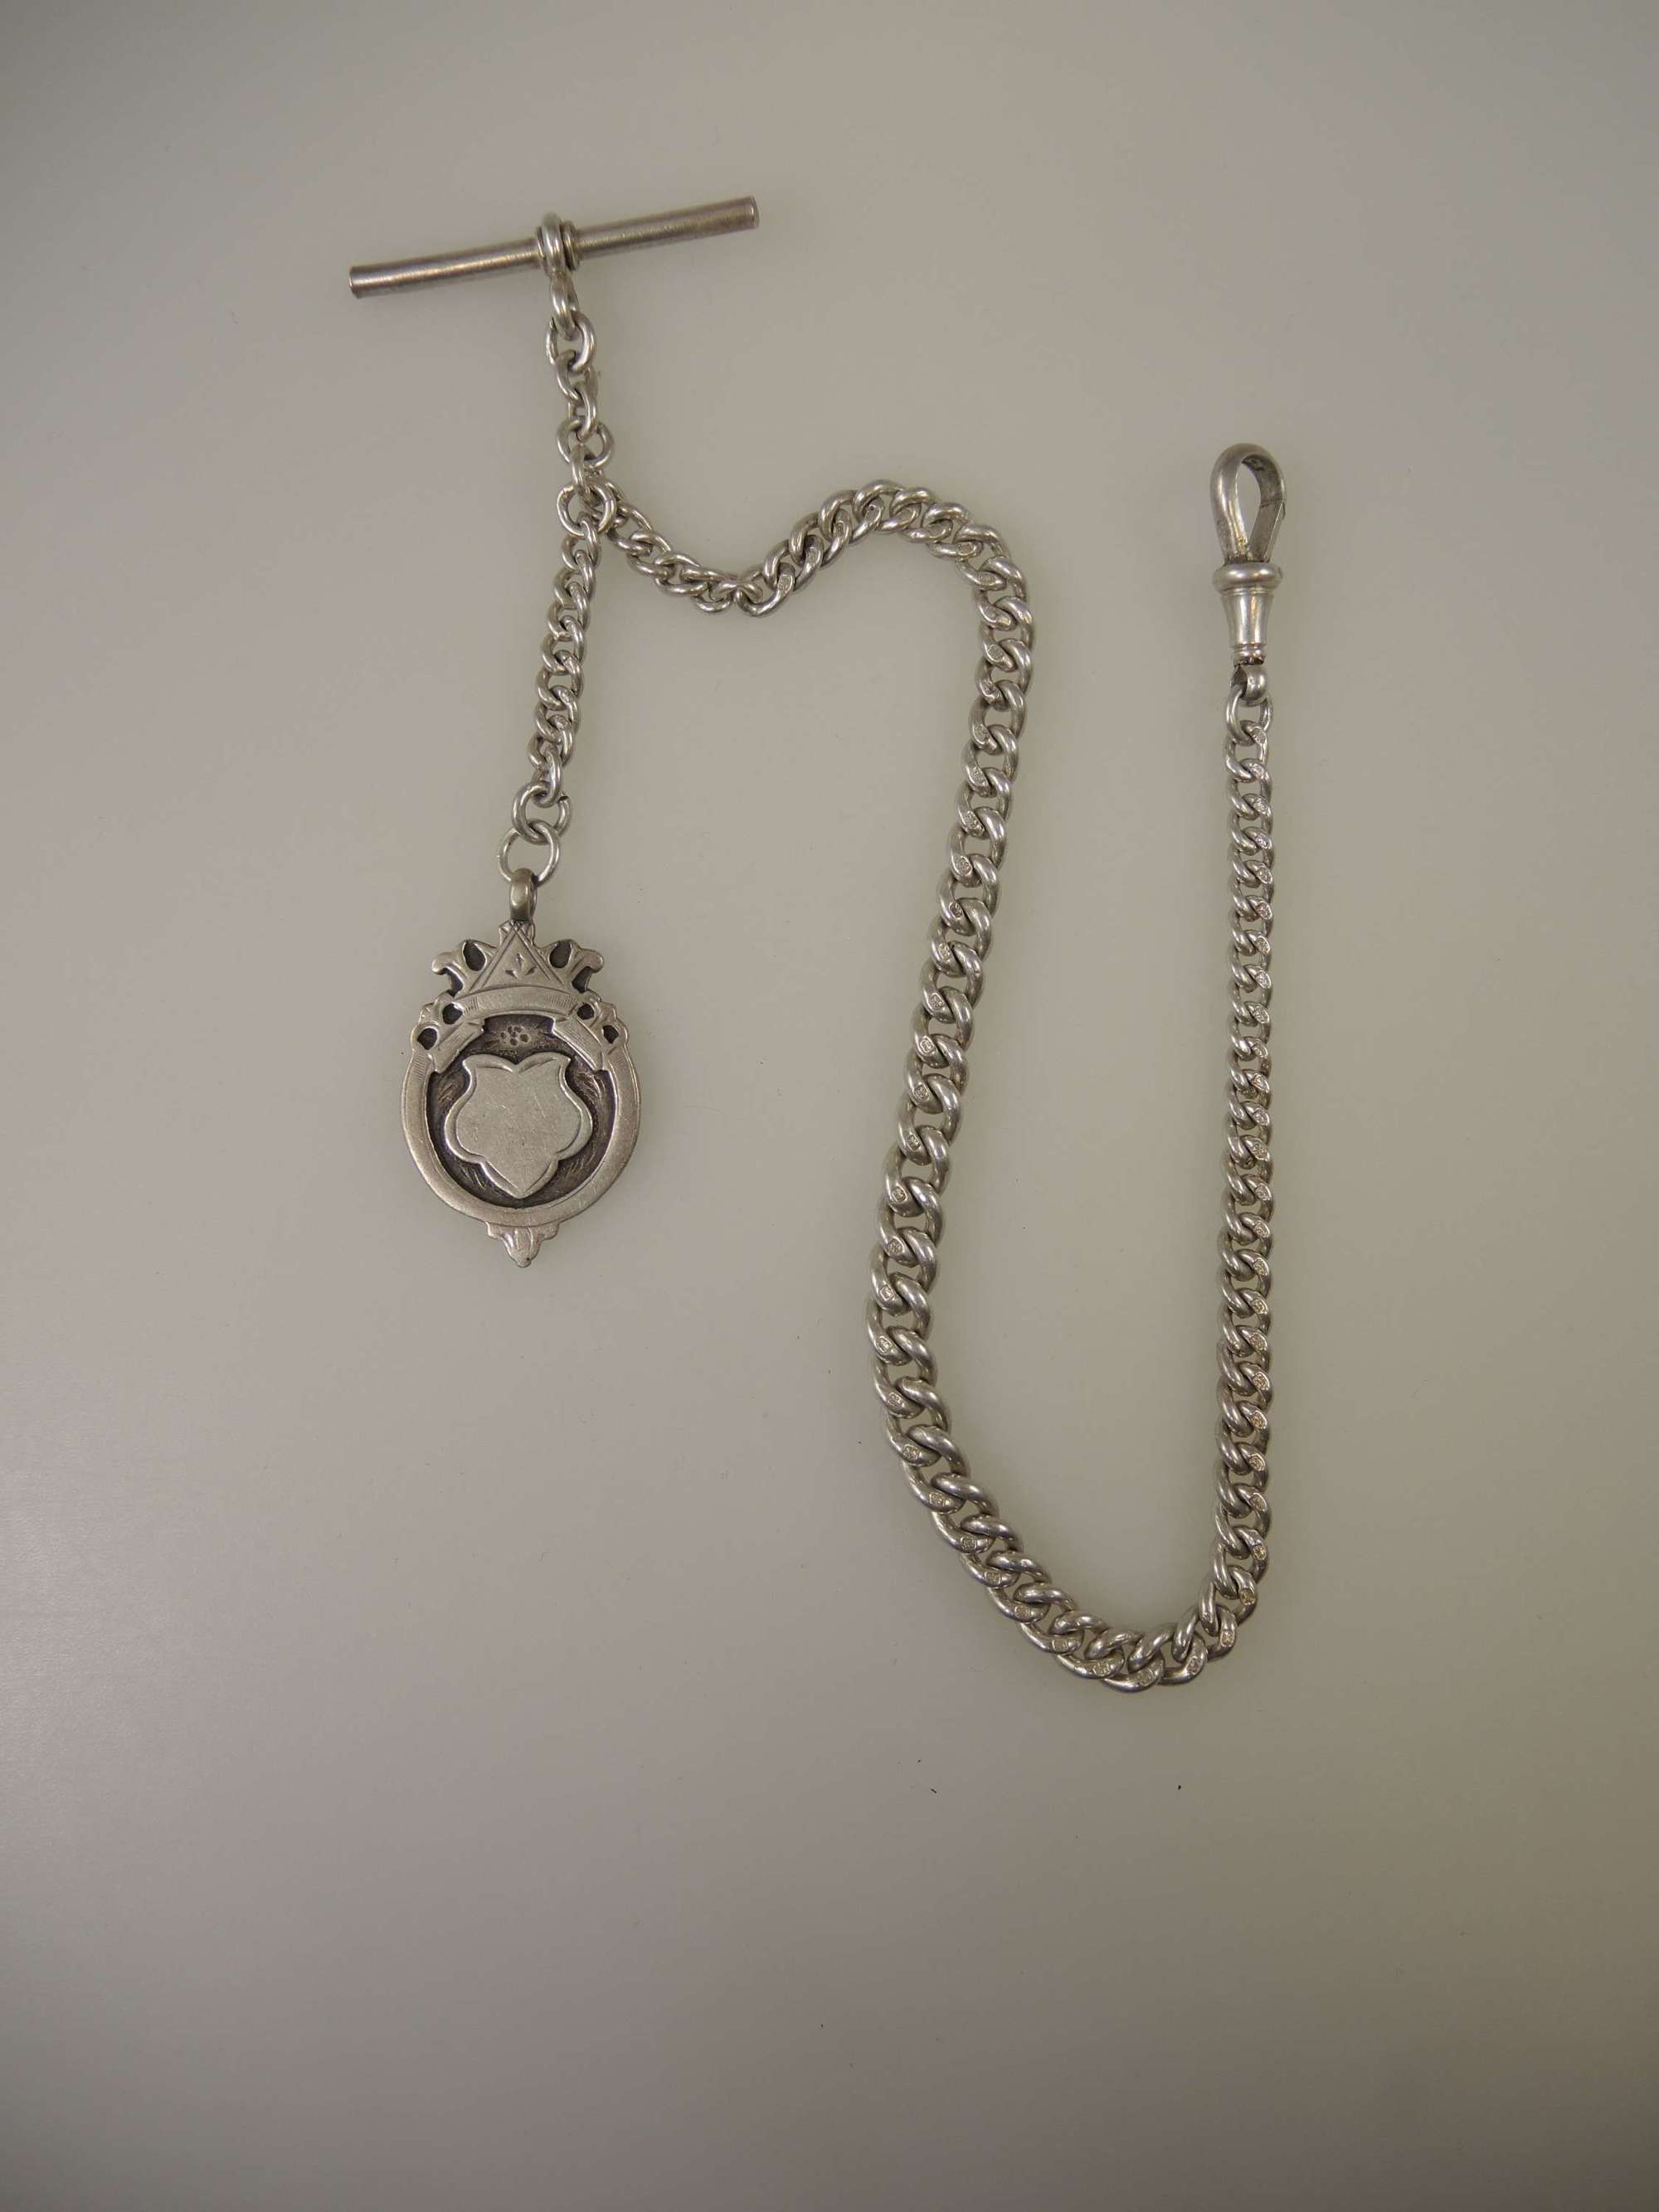 English silver watch chain with fob. Birmingham 1909